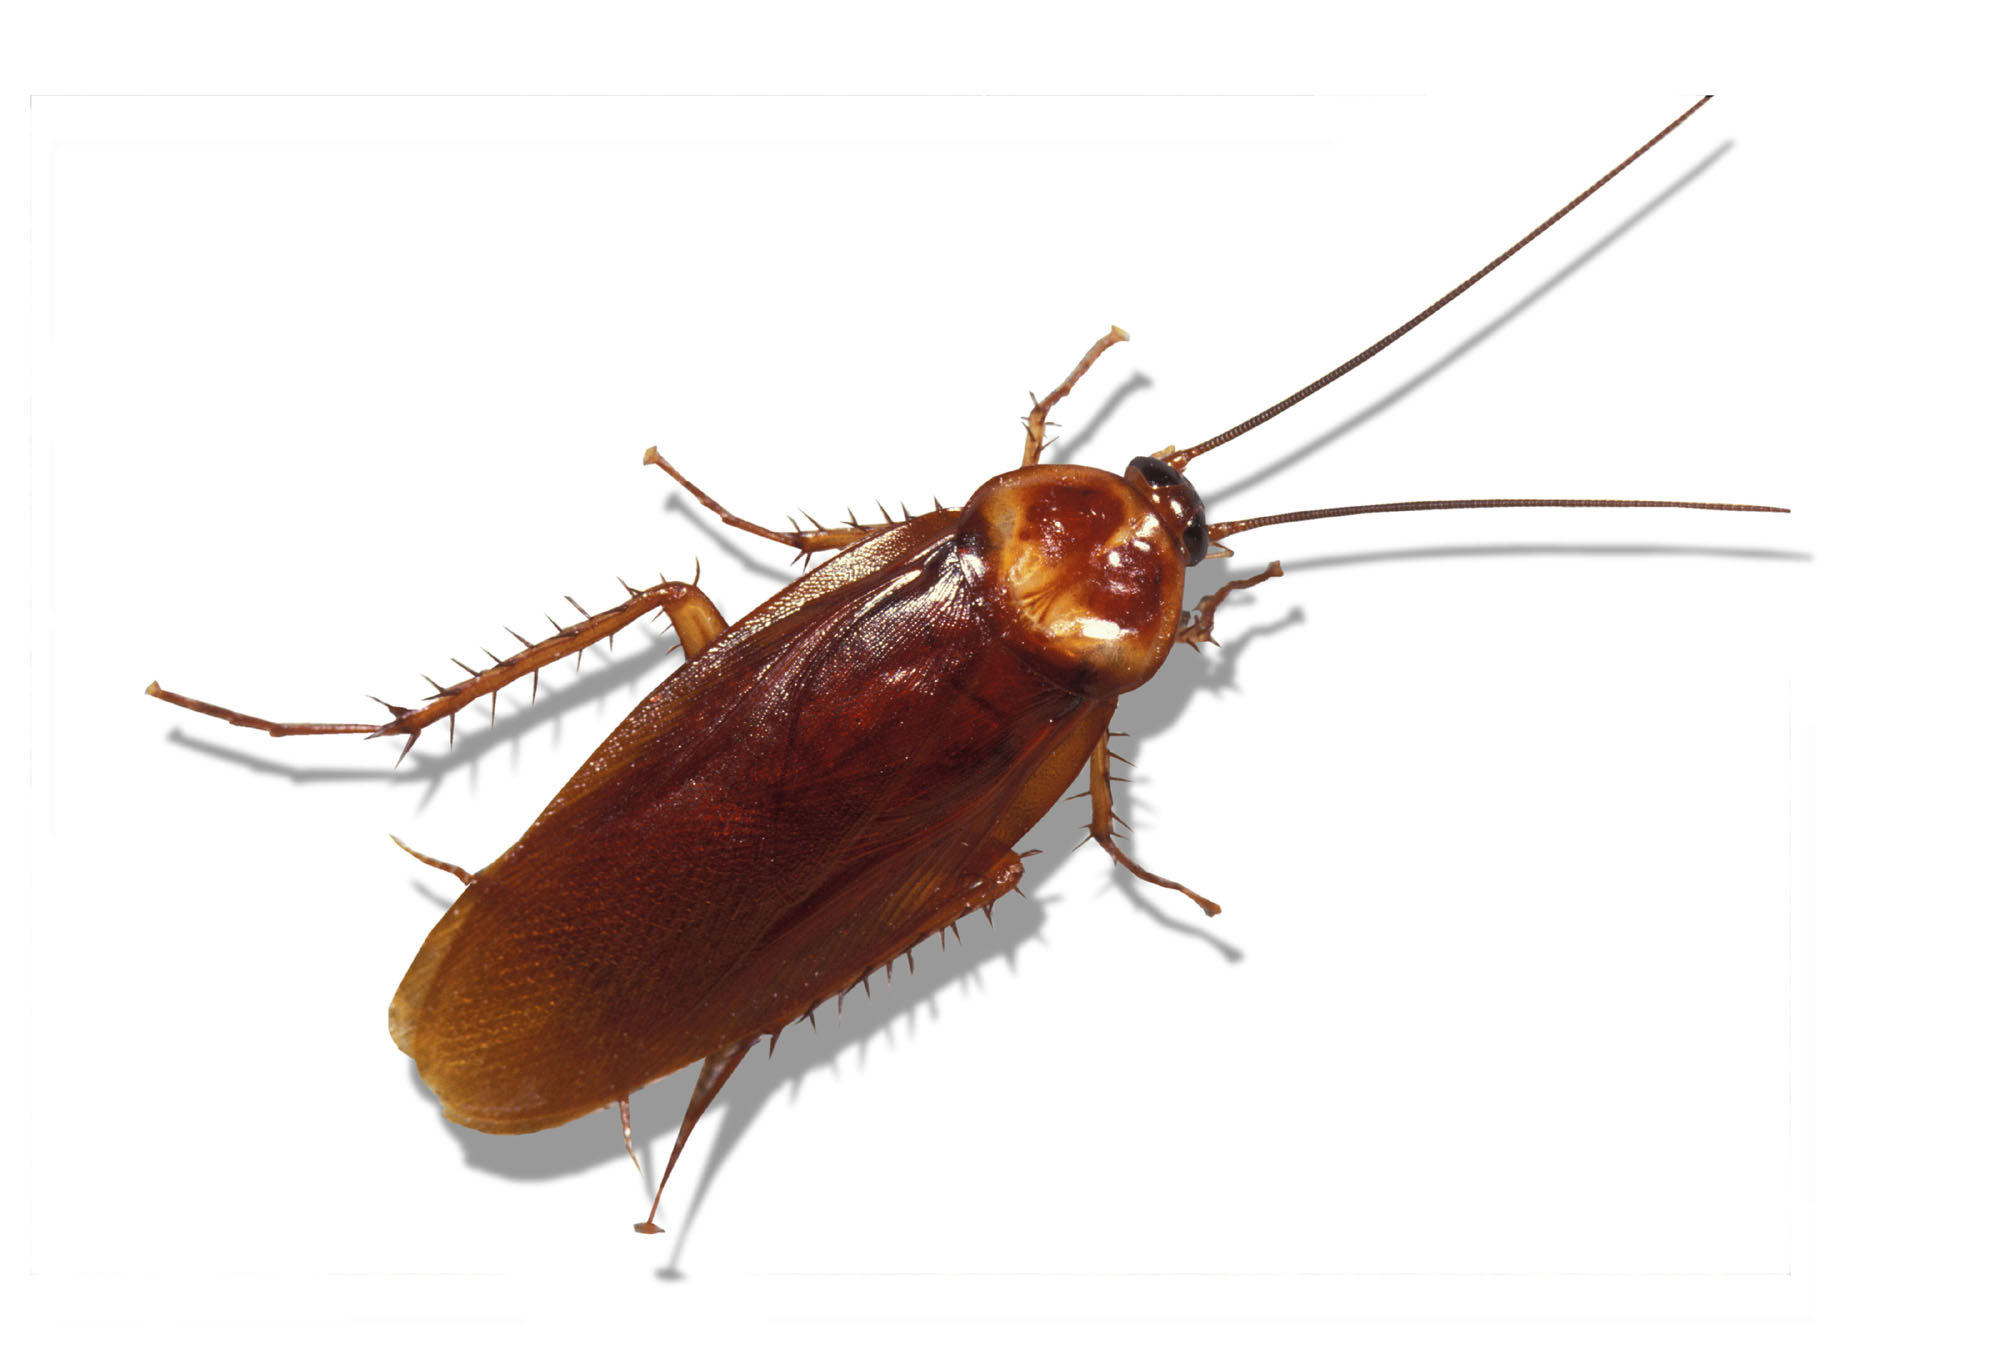 Cockroach Control - American cockroach